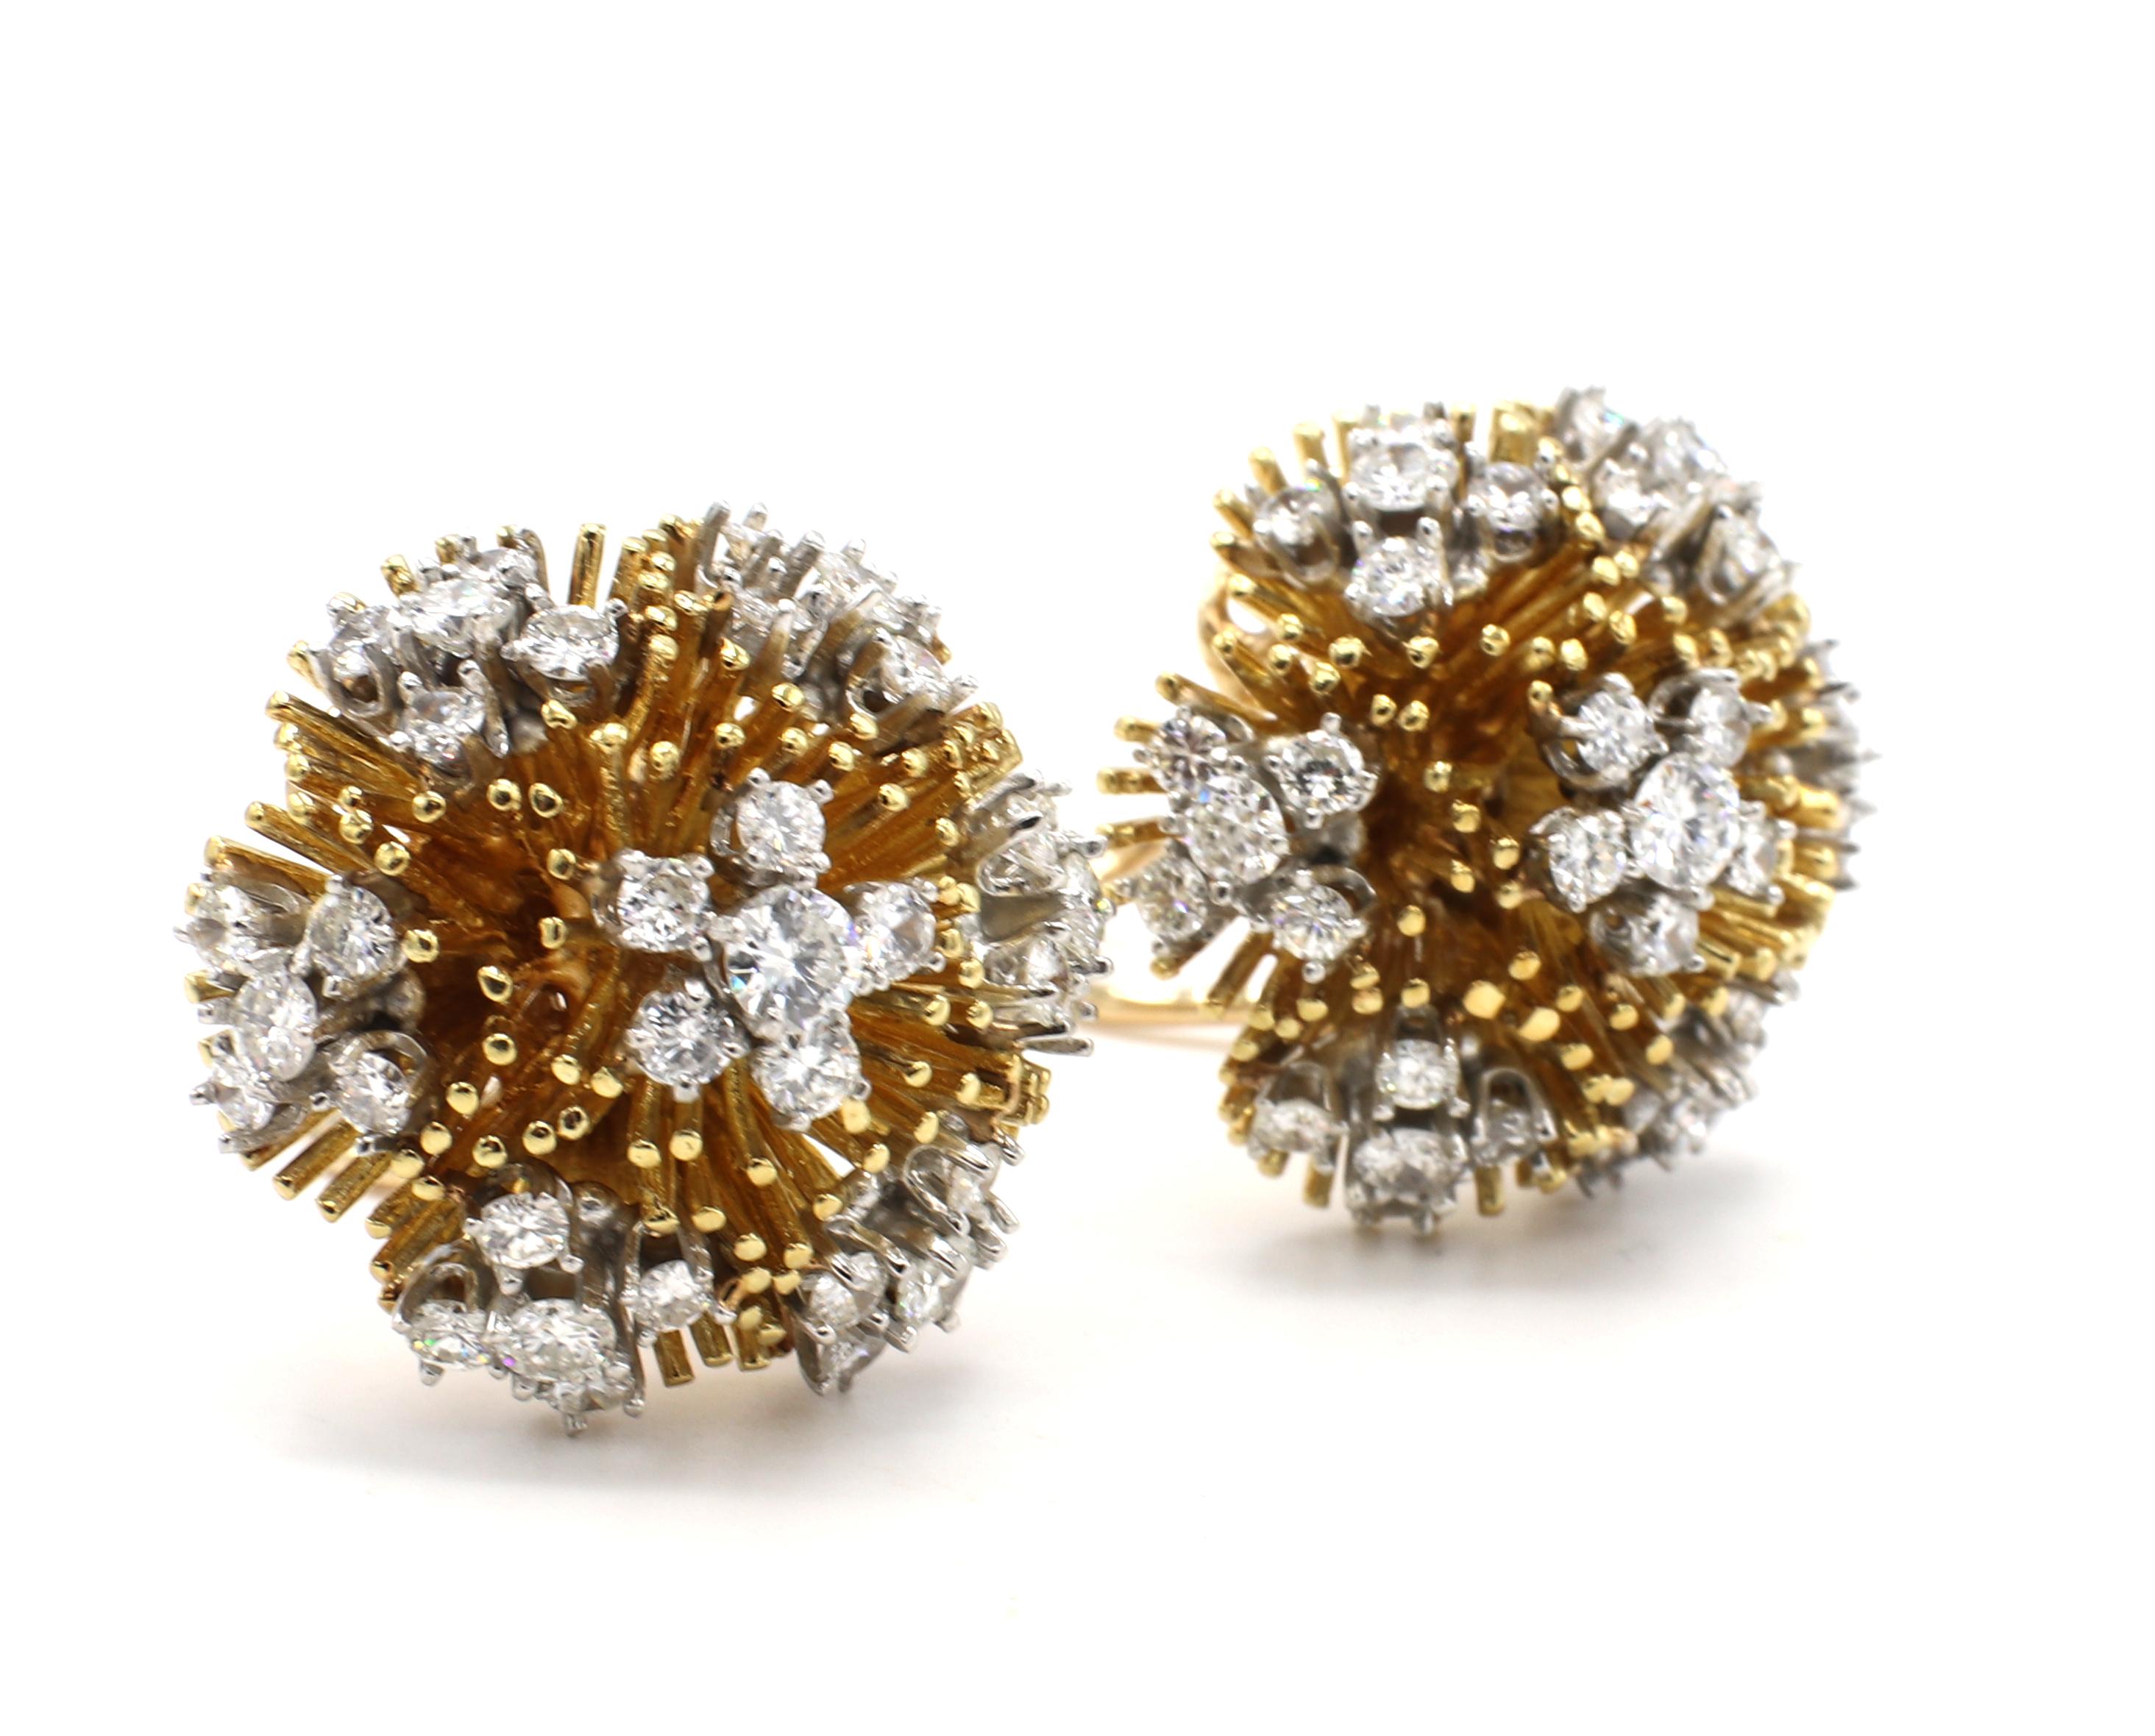 18 Karat Yellow Gold 4.50 Carat Diamond Dome Cluster Earrings 
Metal: 18k yellow gold
Weight: 32.39 grams
Diamonds: Approx. 4.50 CTW G-H VS round diamonds
Diameter: 25mm
Backs: Lever backs (no post) 

